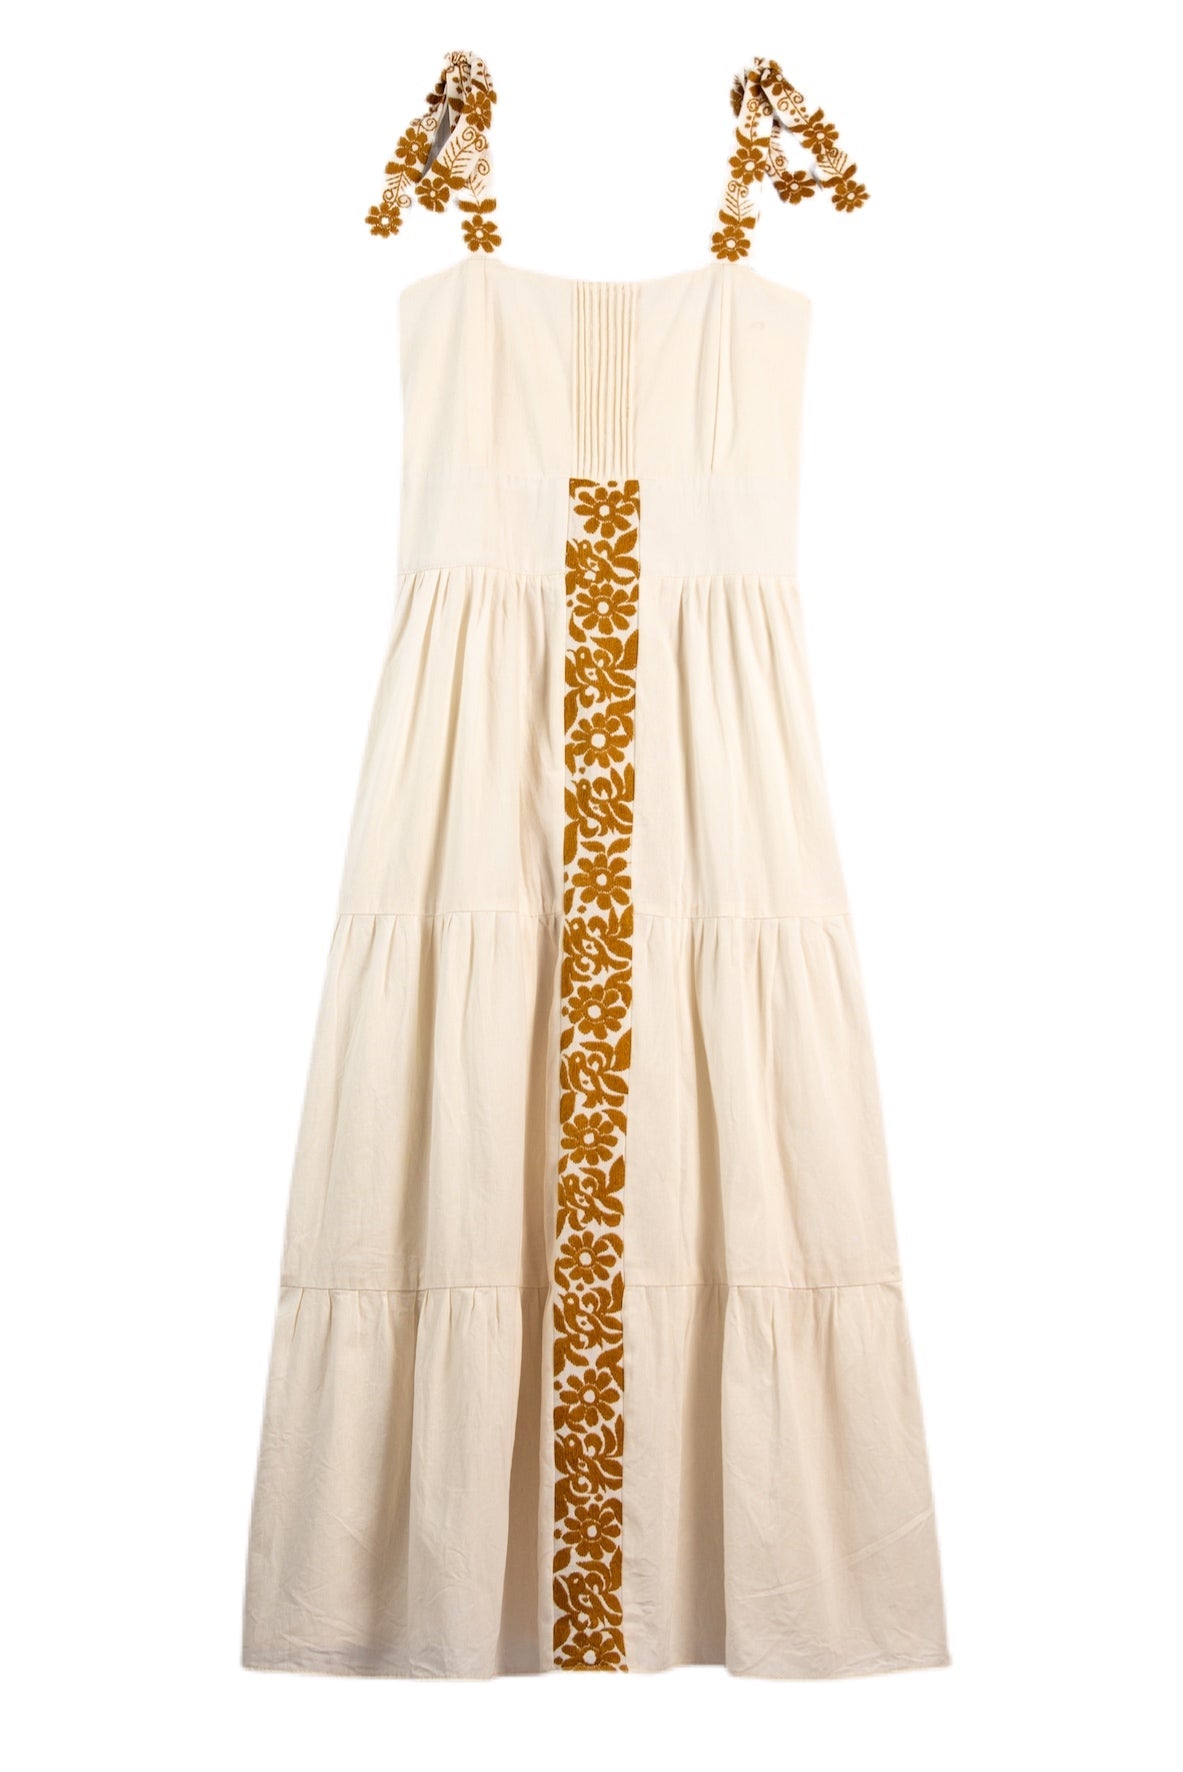 Goldenrod Embroidered Raya Maxi Dress by Larkin Lane